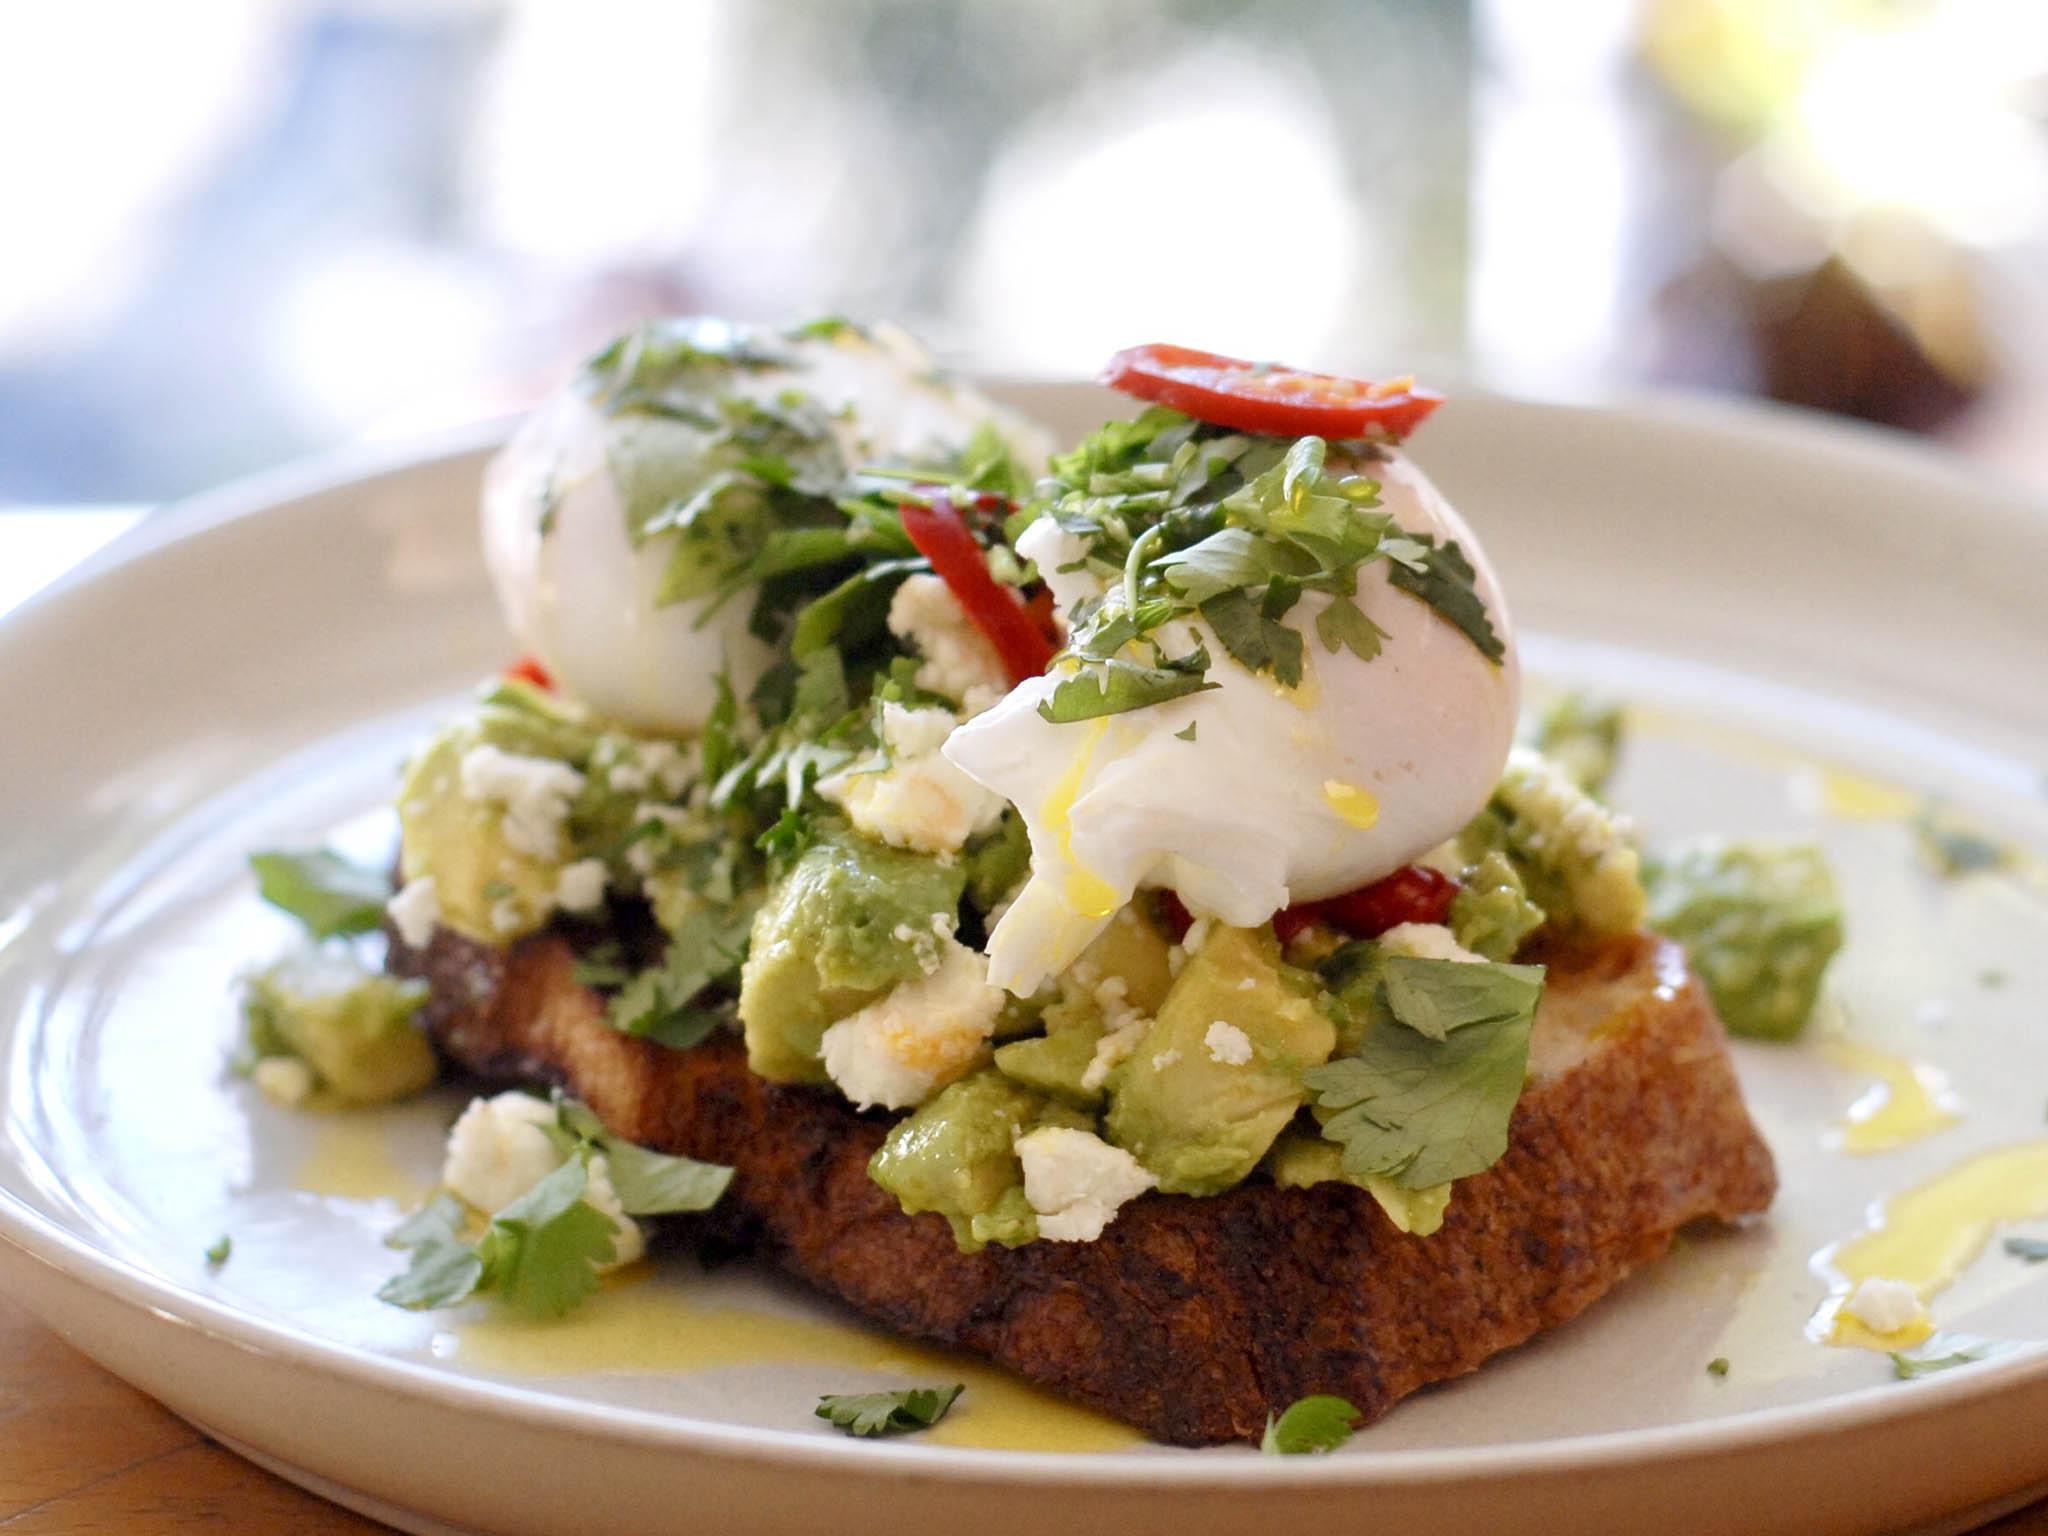 Flat White Kitchen’s house breakfast of avocado on toast, chilli, feta and coriander